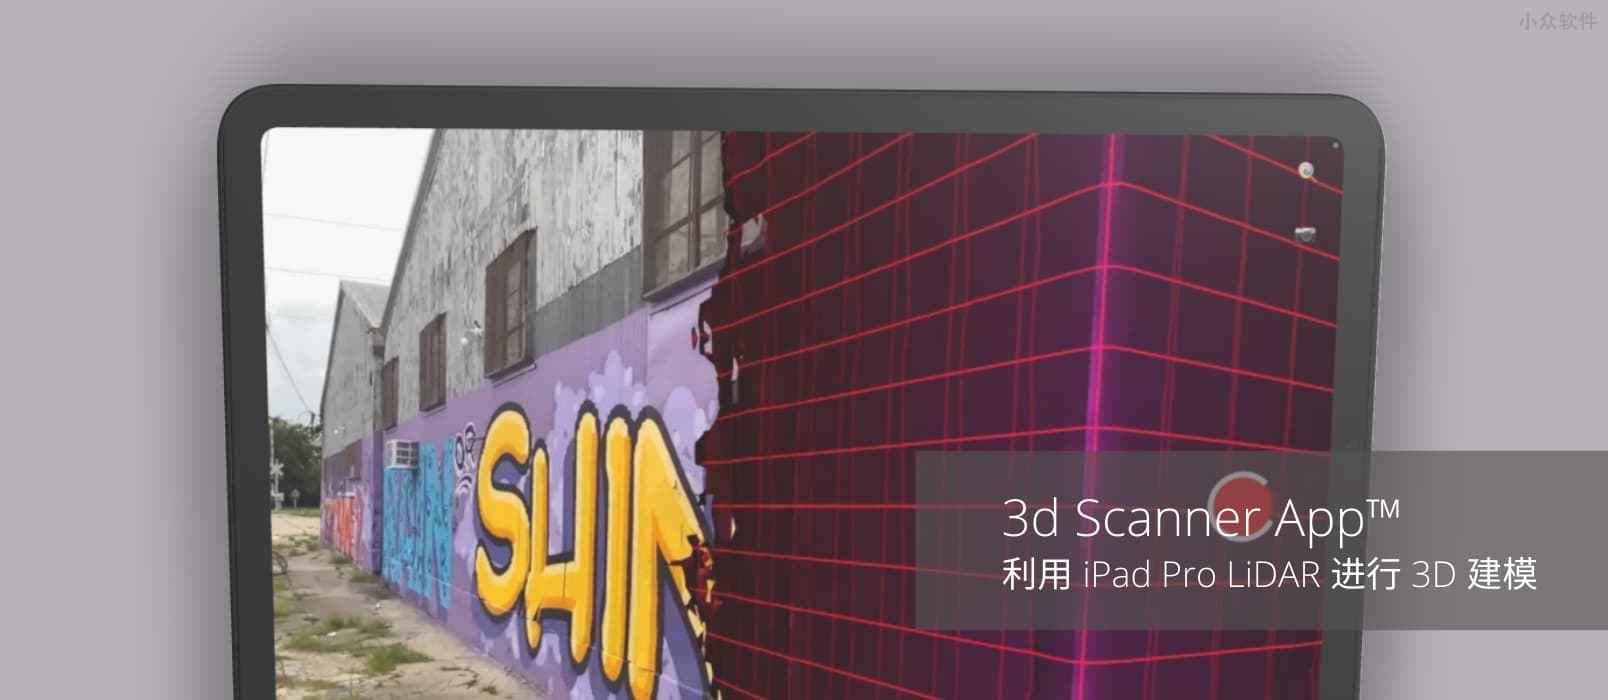 3d Scanner App™ - 利用 iPad Pro LIDAR 激光雷达扫描建筑物，进行 3D 建模 1